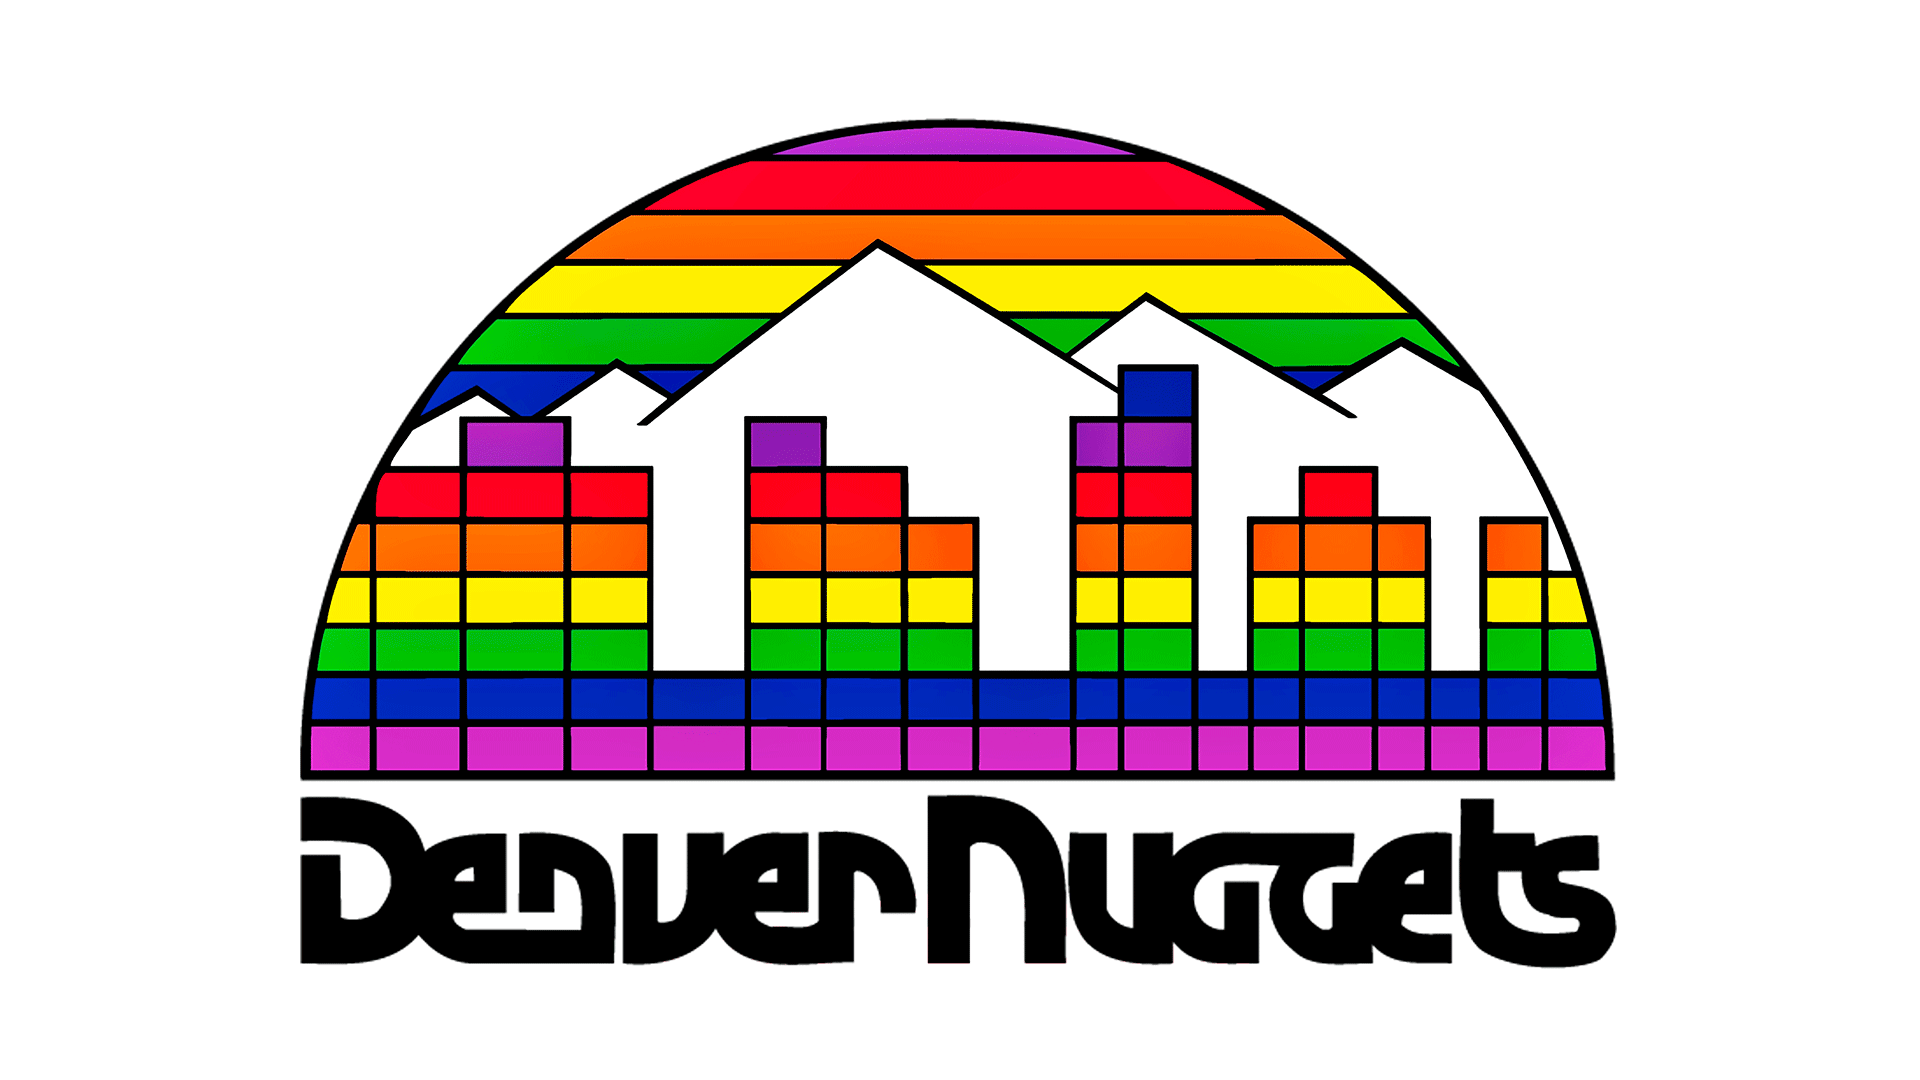 Denver Nuggets Logo Transparent